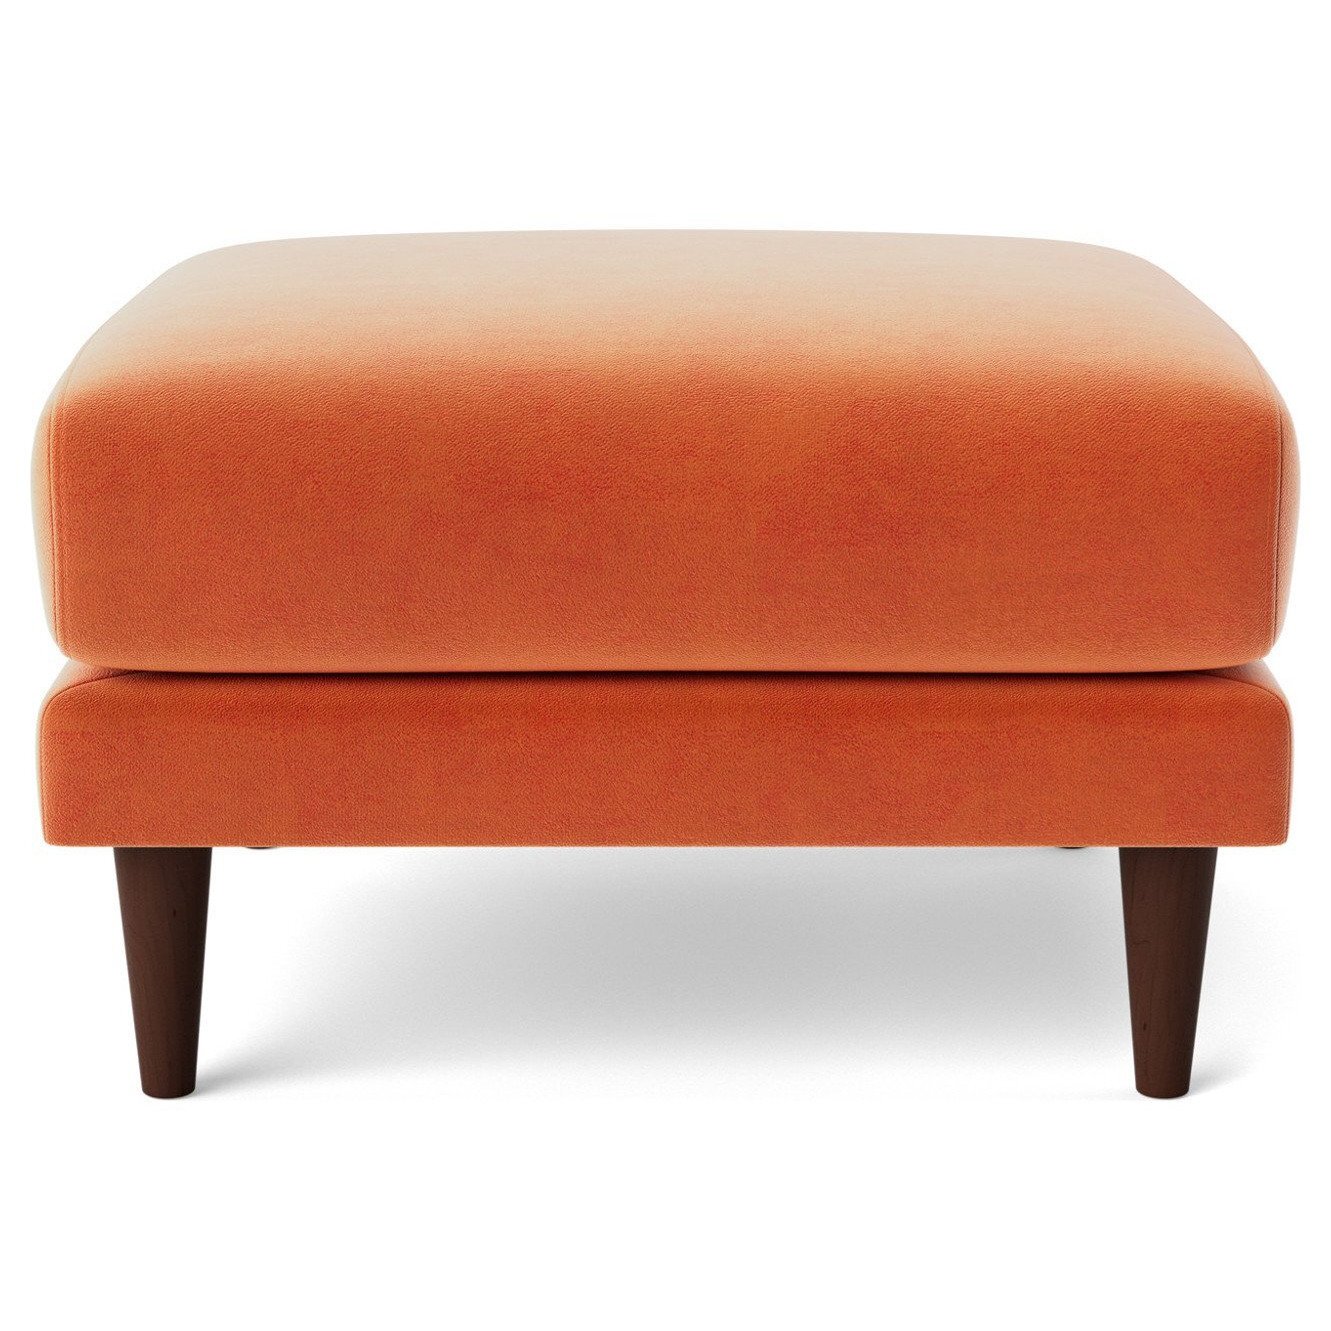 Swoon Turin Velvet Ottoman Footstool - Burnt Orange - image 1